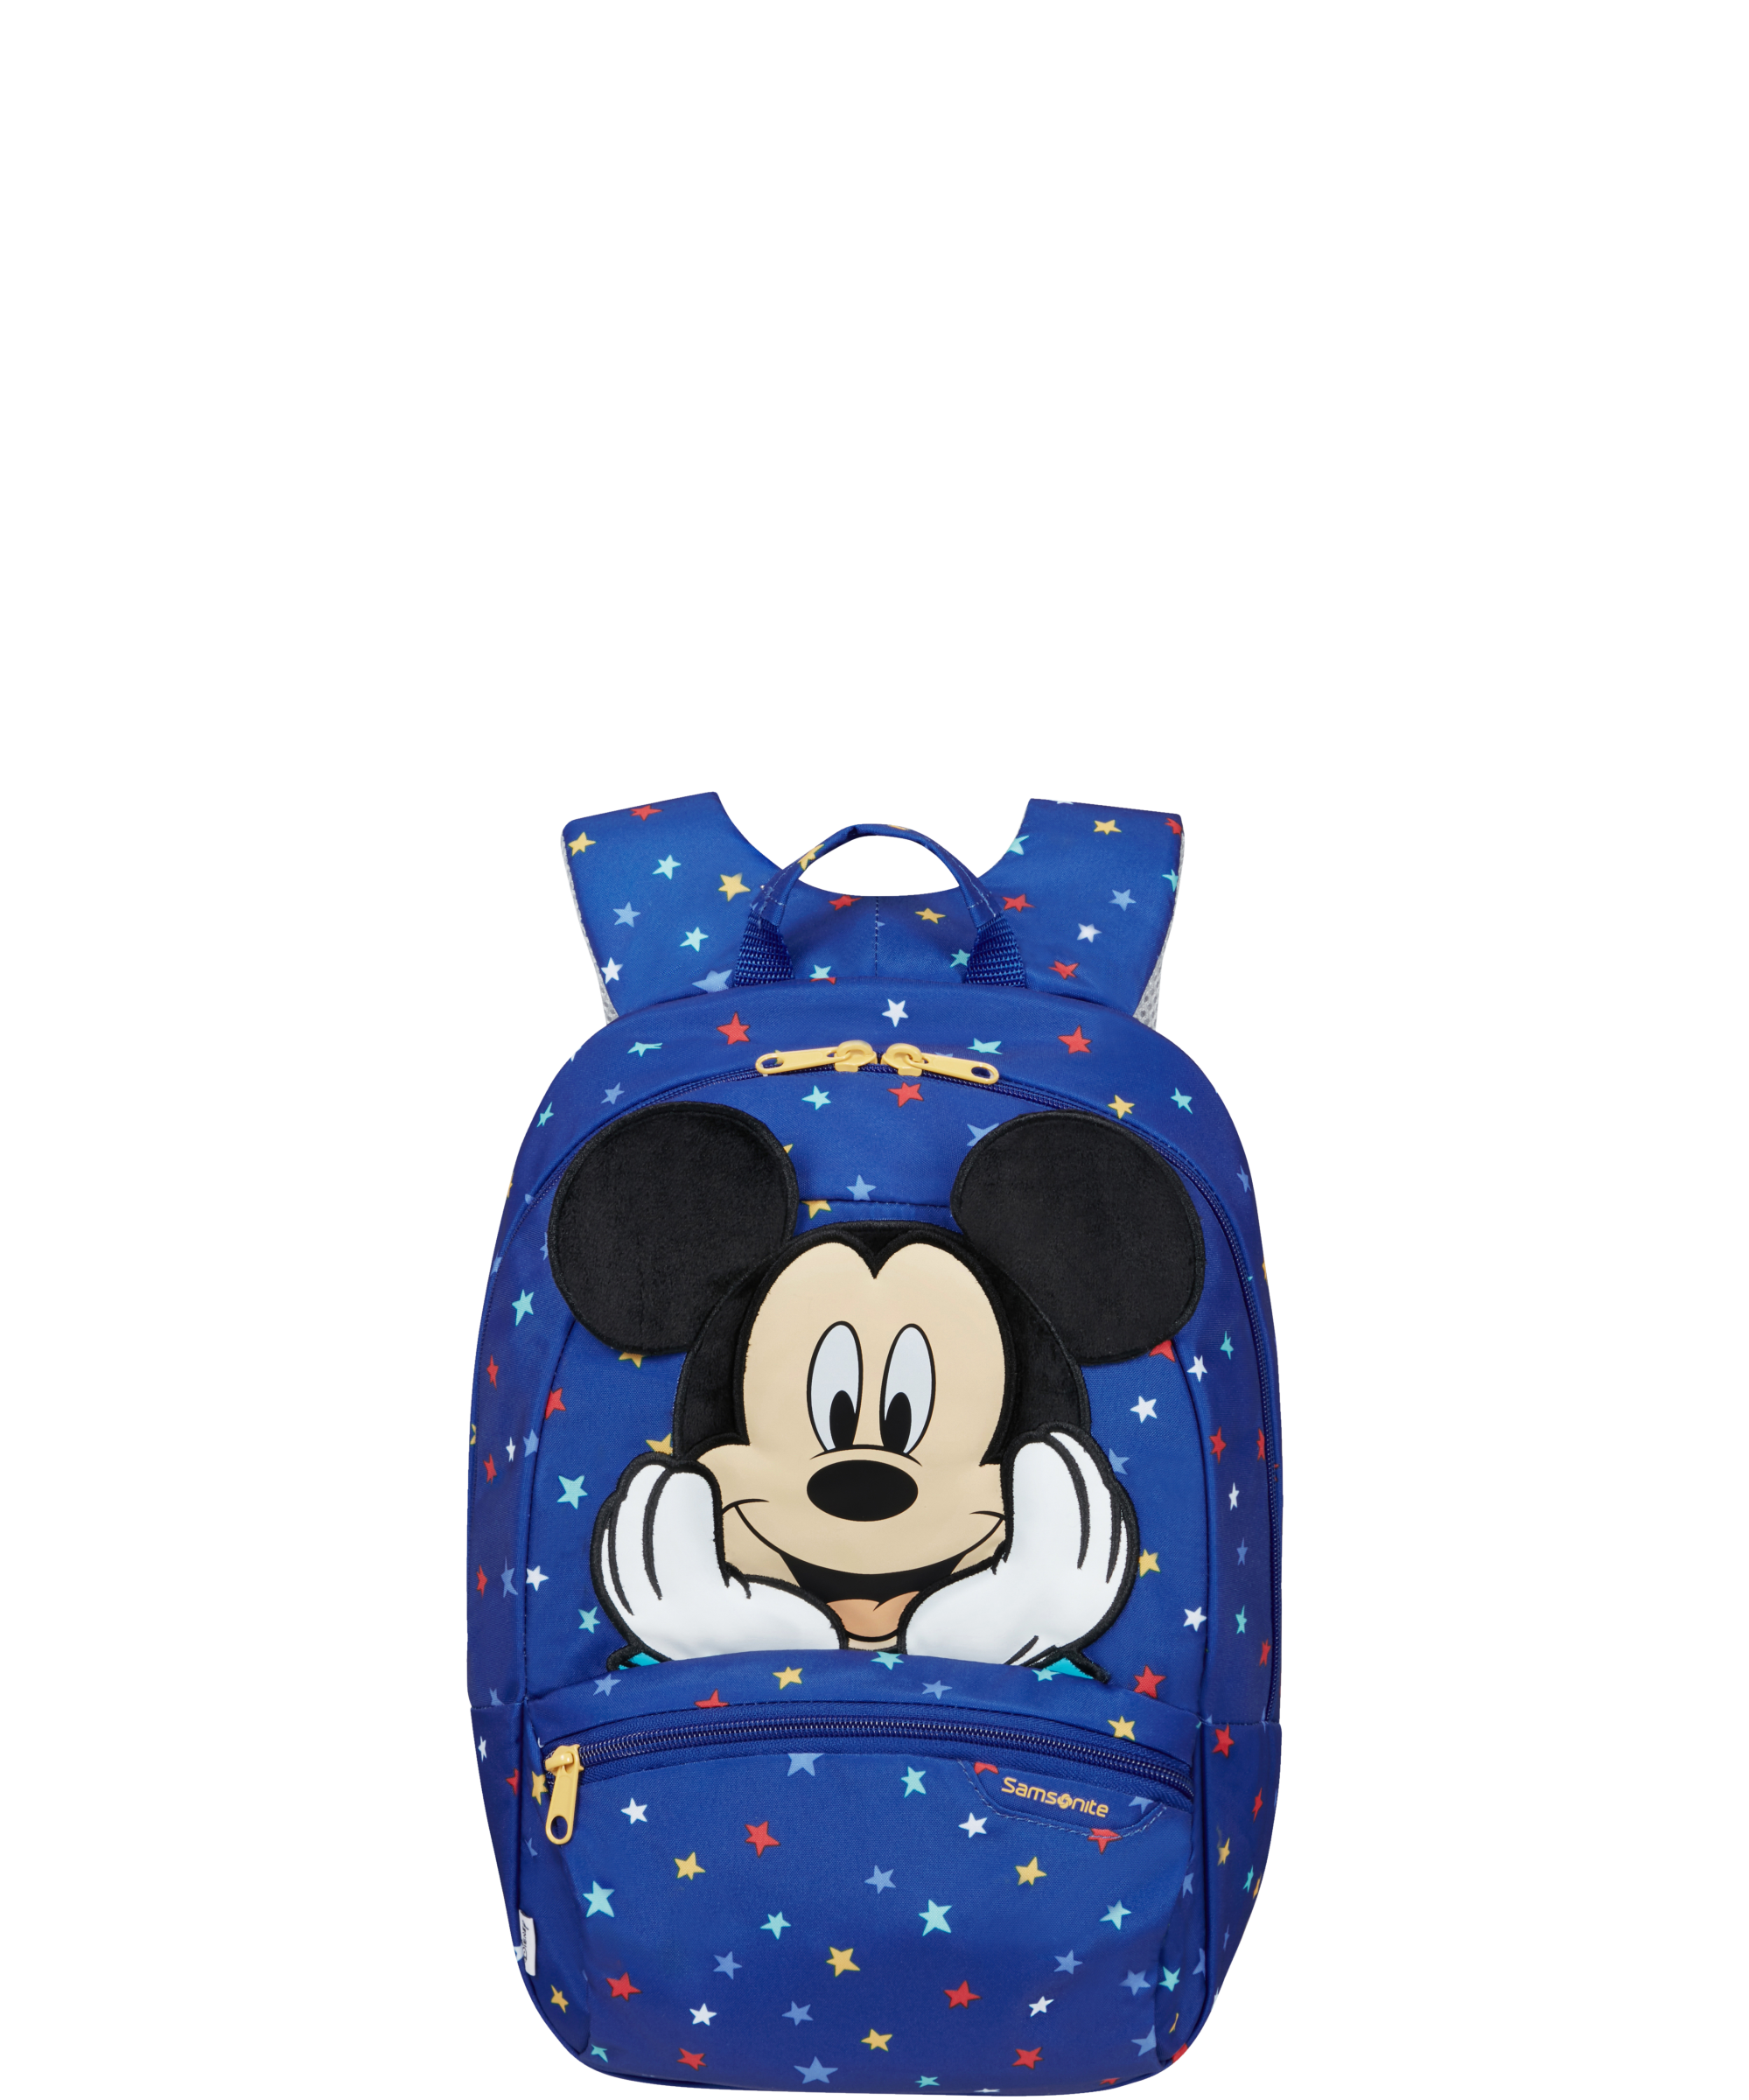 49cm Samsonite Boys' Children's Luggage Mickey and Donald Stars 